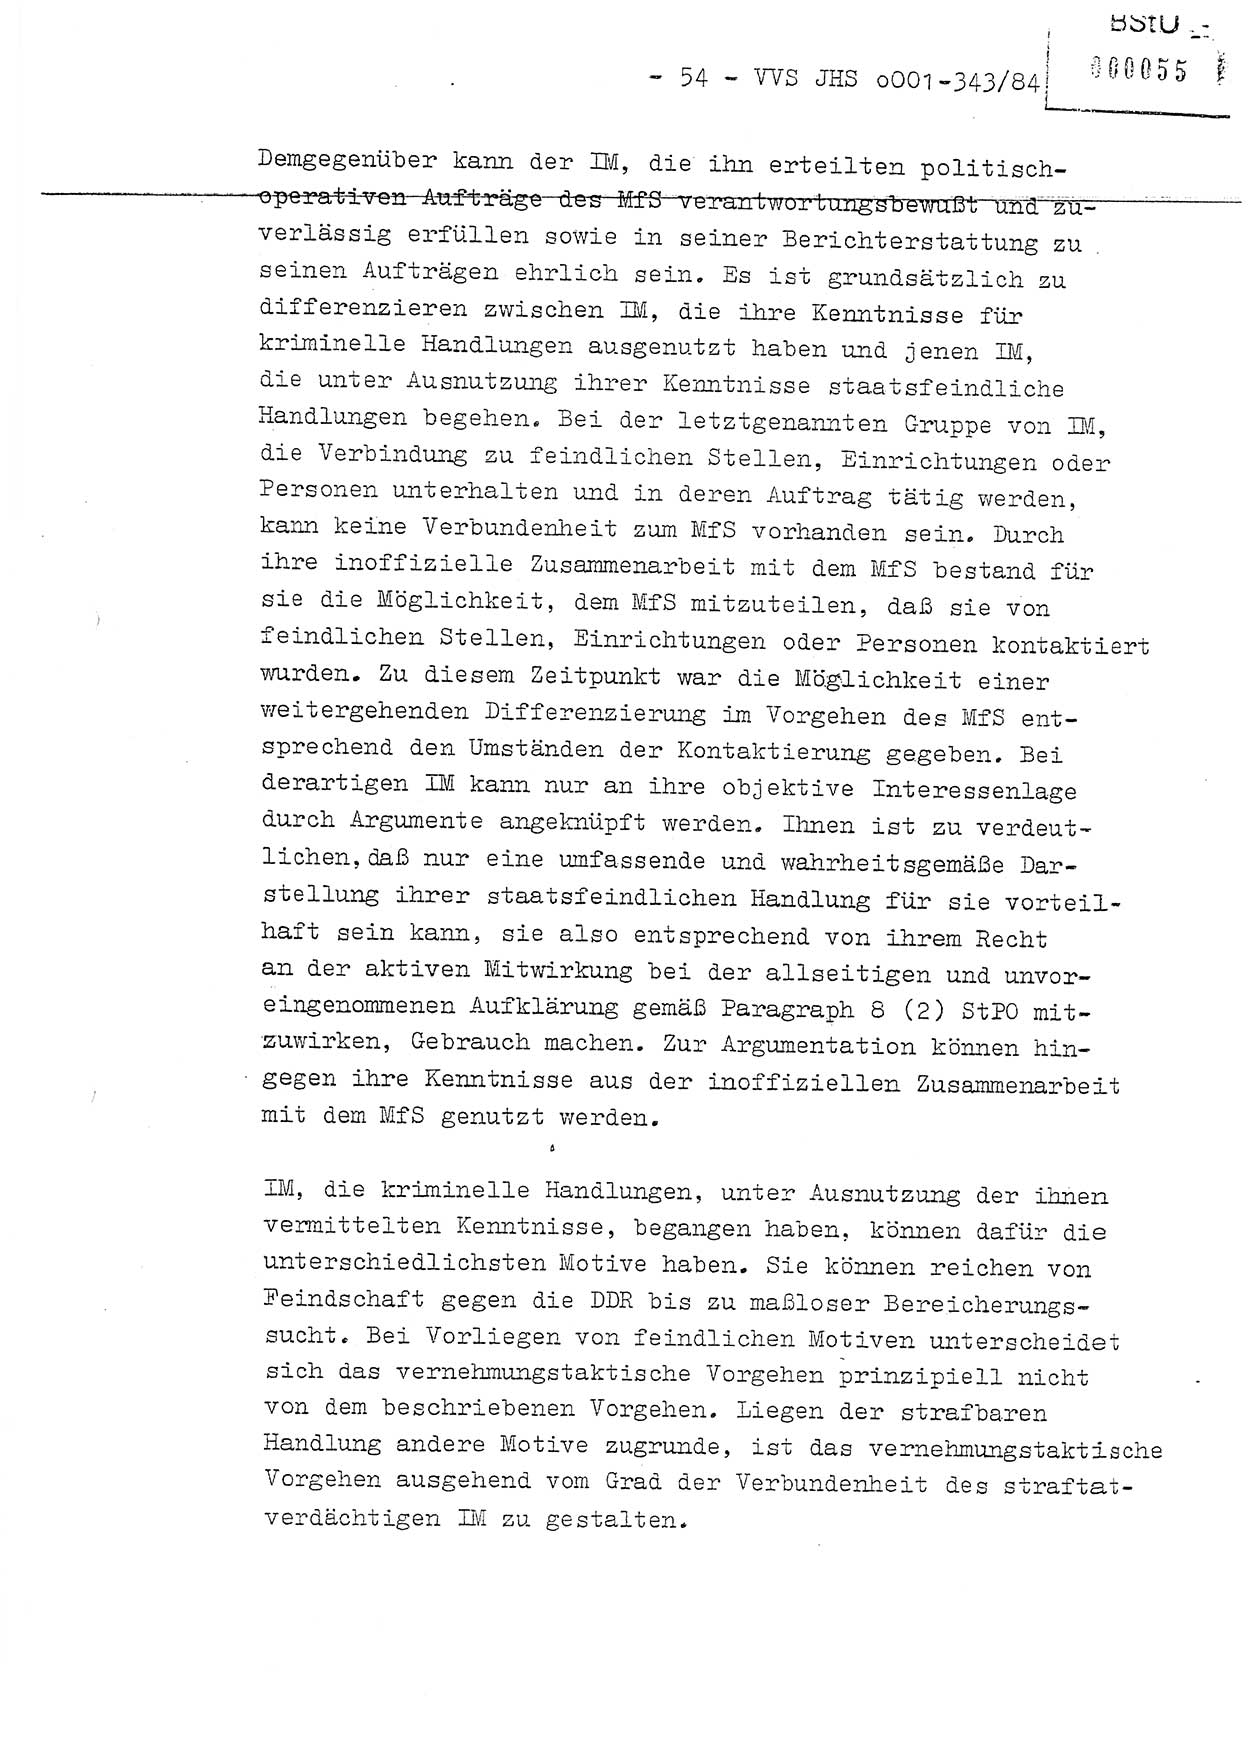 Diplomarbeit, Oberleutnant Bernd Michael (HA Ⅸ/5), Oberleutnant Peter Felber (HA IX/5), Ministerium für Staatssicherheit (MfS) [Deutsche Demokratische Republik (DDR)], Juristische Hochschule (JHS), Vertrauliche Verschlußsache (VVS) o001-343/84, Potsdam 1985, Seite 54 (Dipl.-Arb. MfS DDR JHS VVS o001-343/84 1985, S. 54)